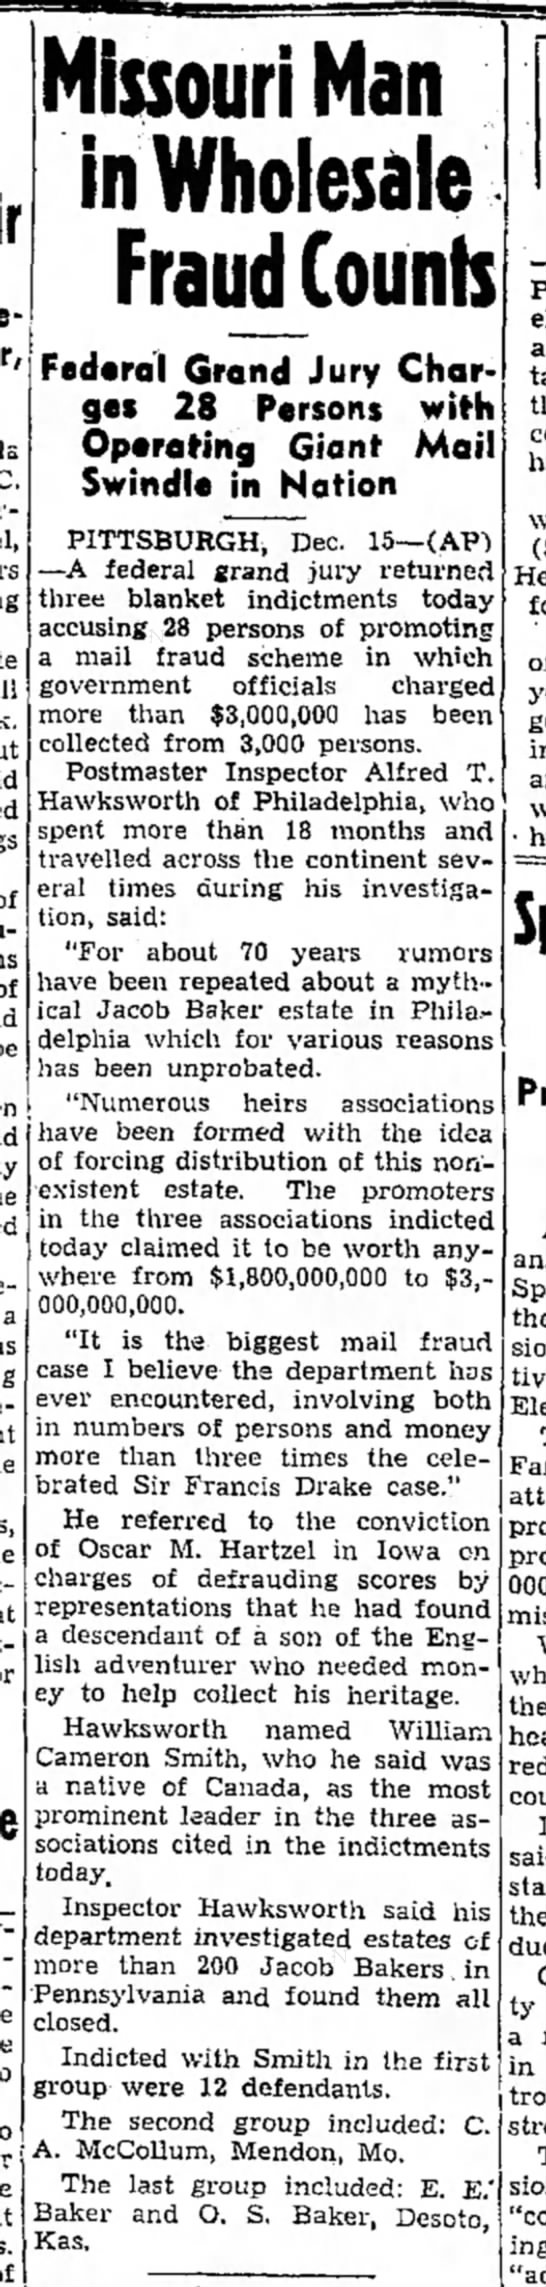 Baker estate fraud
The Daily Capital News (Jefferson City, Missouri) 16 Dec  1936 page 2 - 